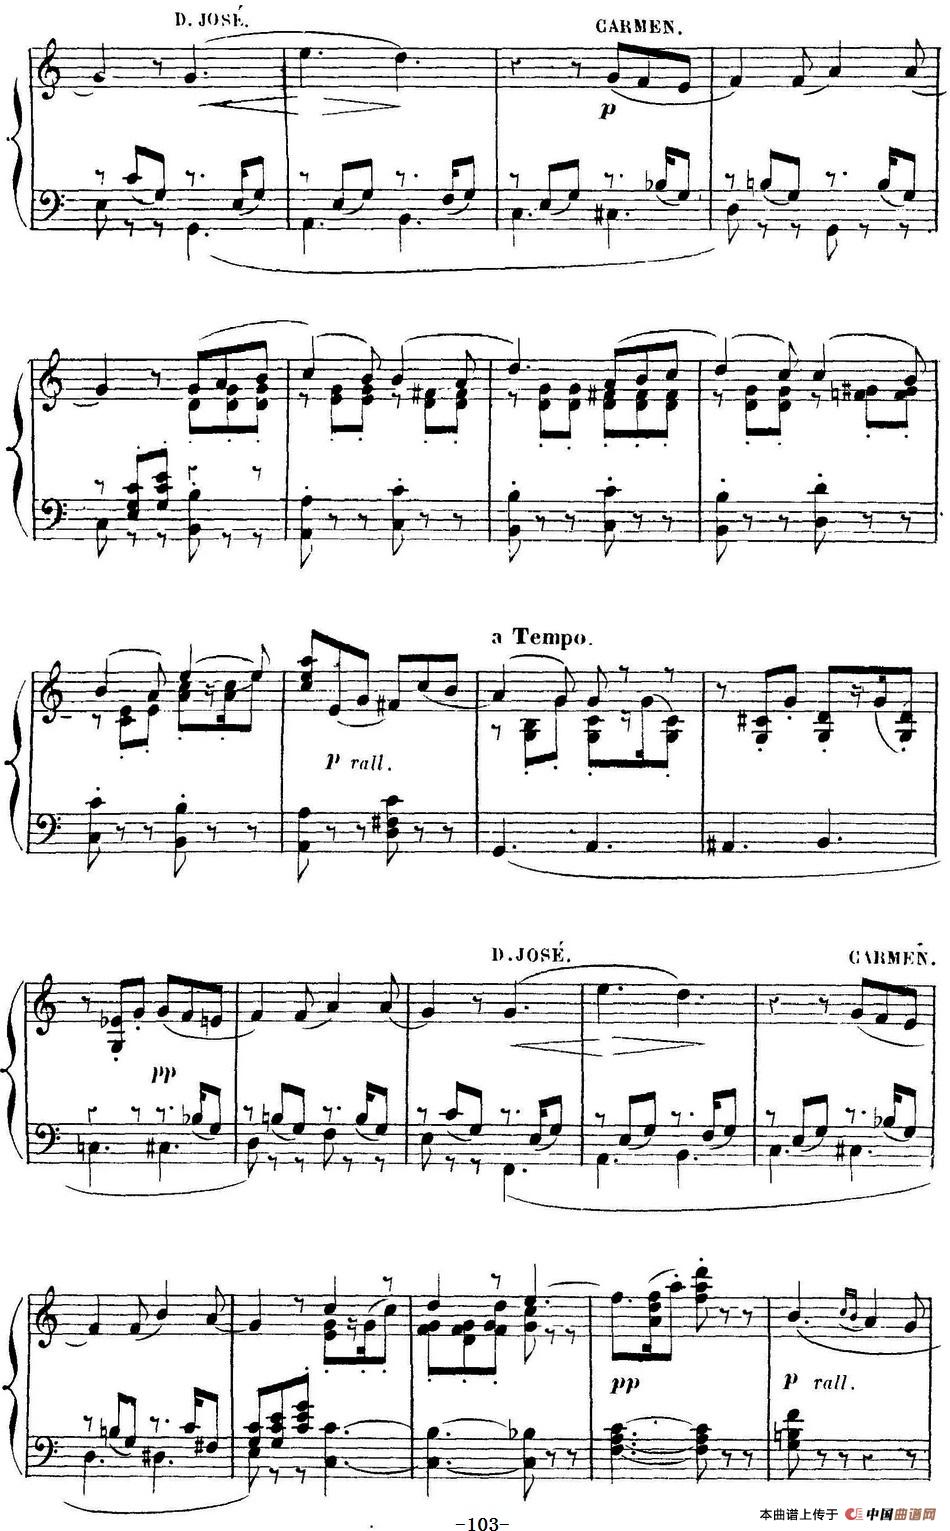 Carmen for Solo Piano（卡门全剧钢琴独奏版）（No.1